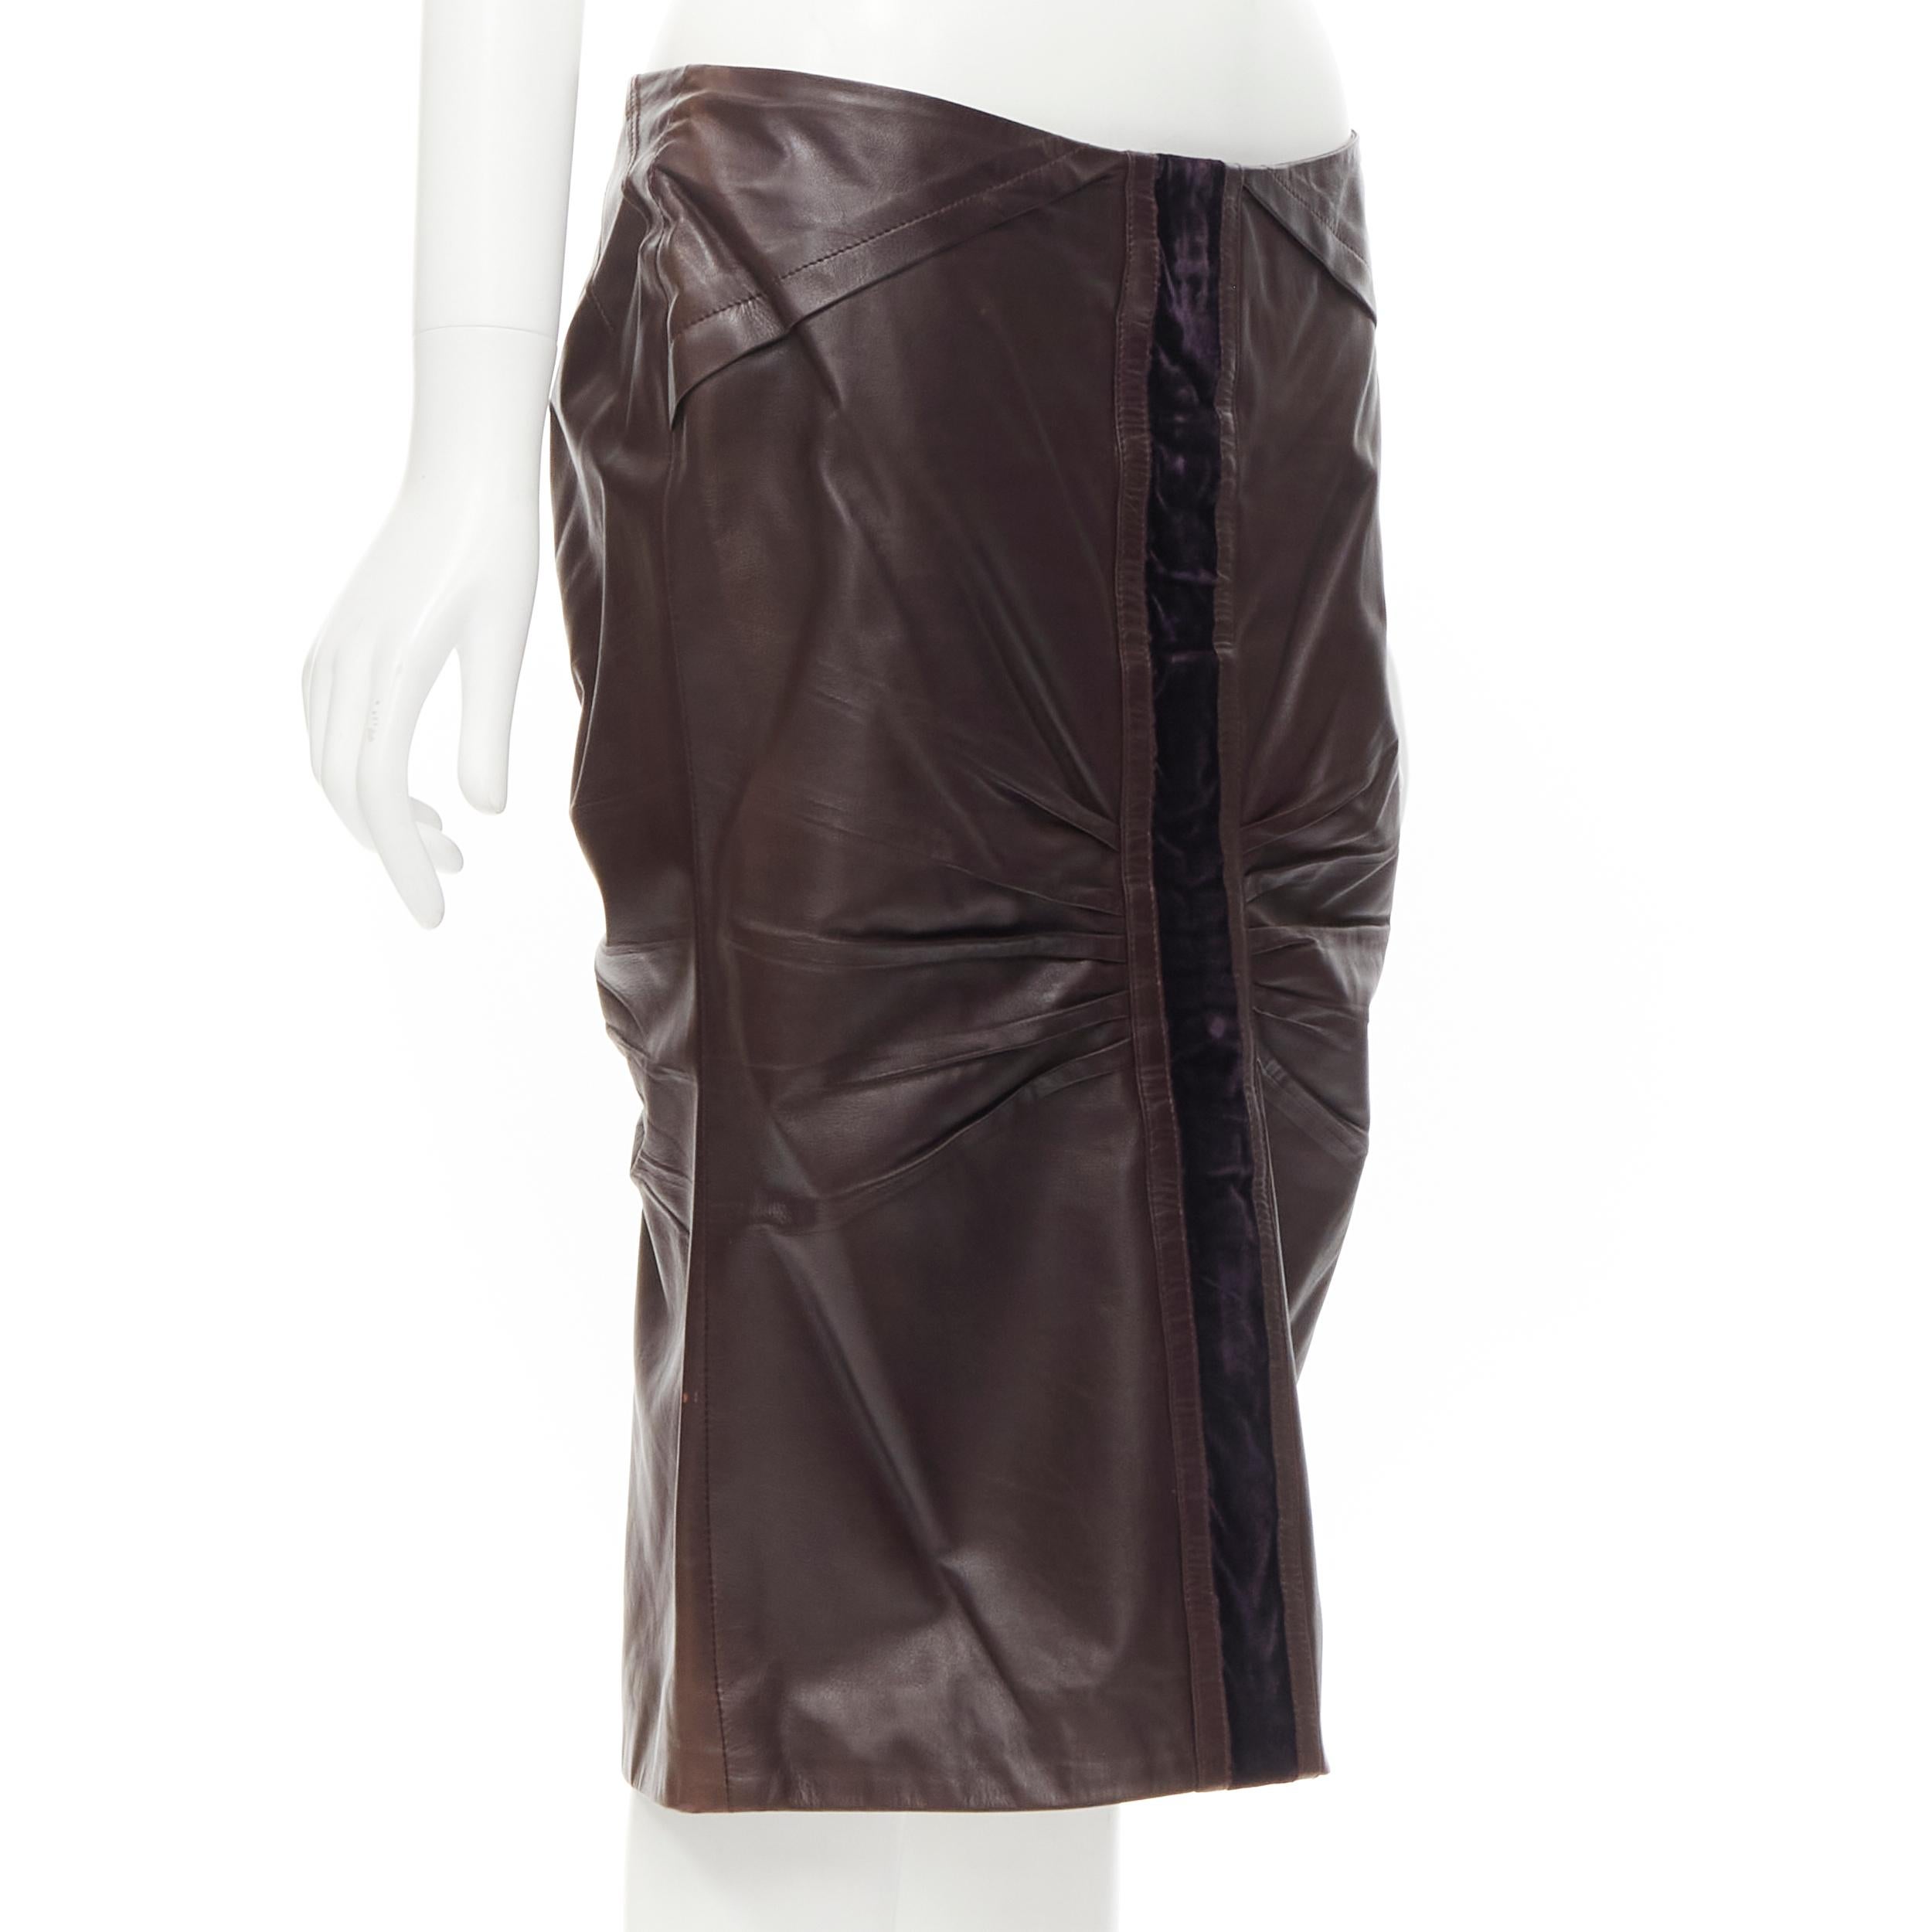 burgundy leather pencil skirt